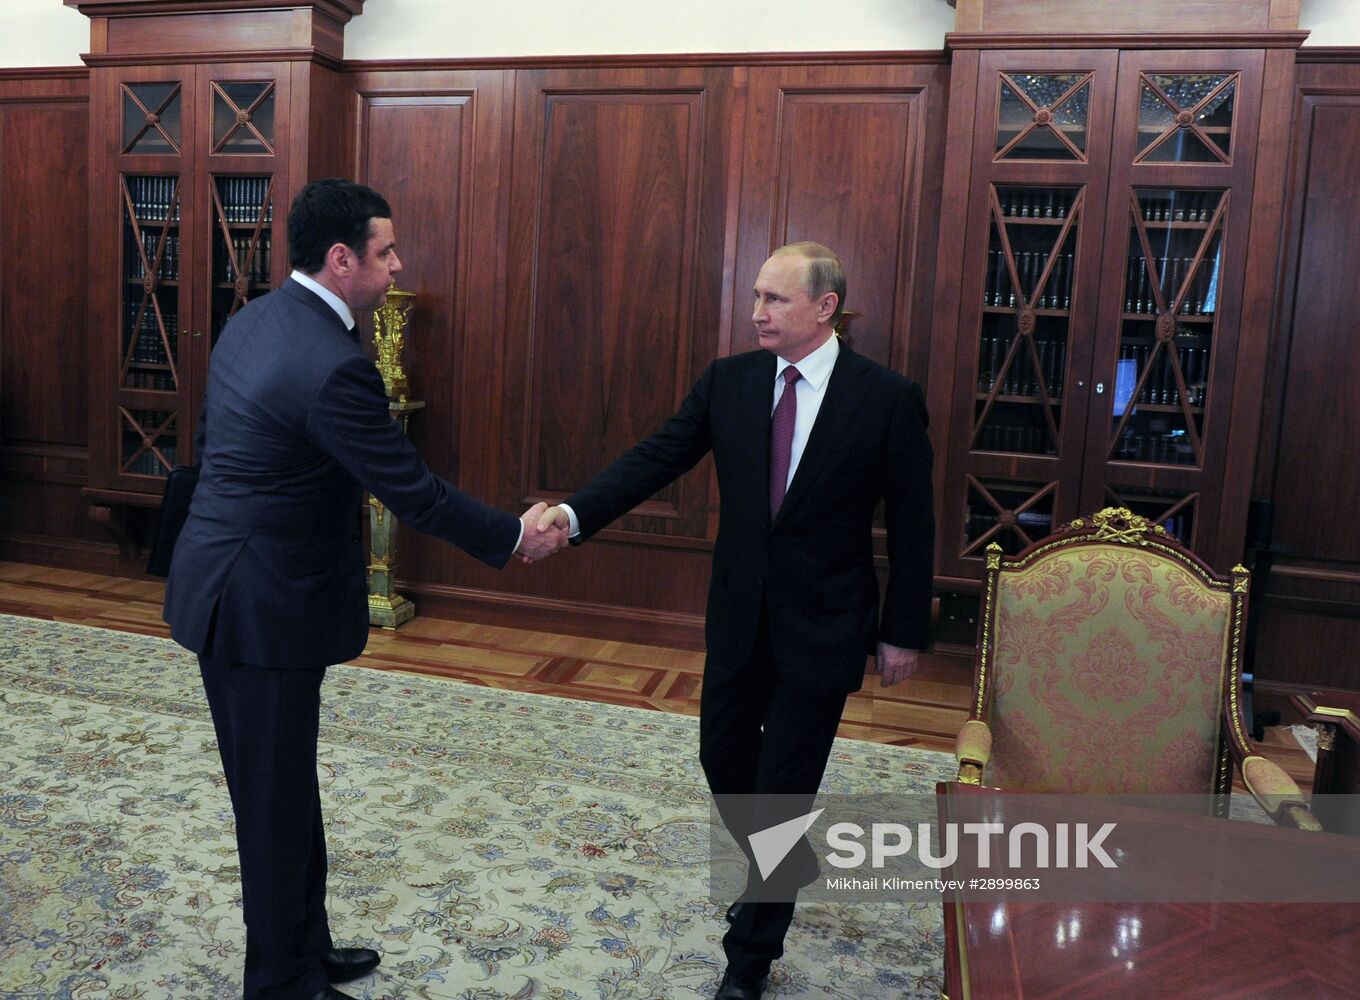 Russian President Vladimir Putin meets with Dmitry Mironov